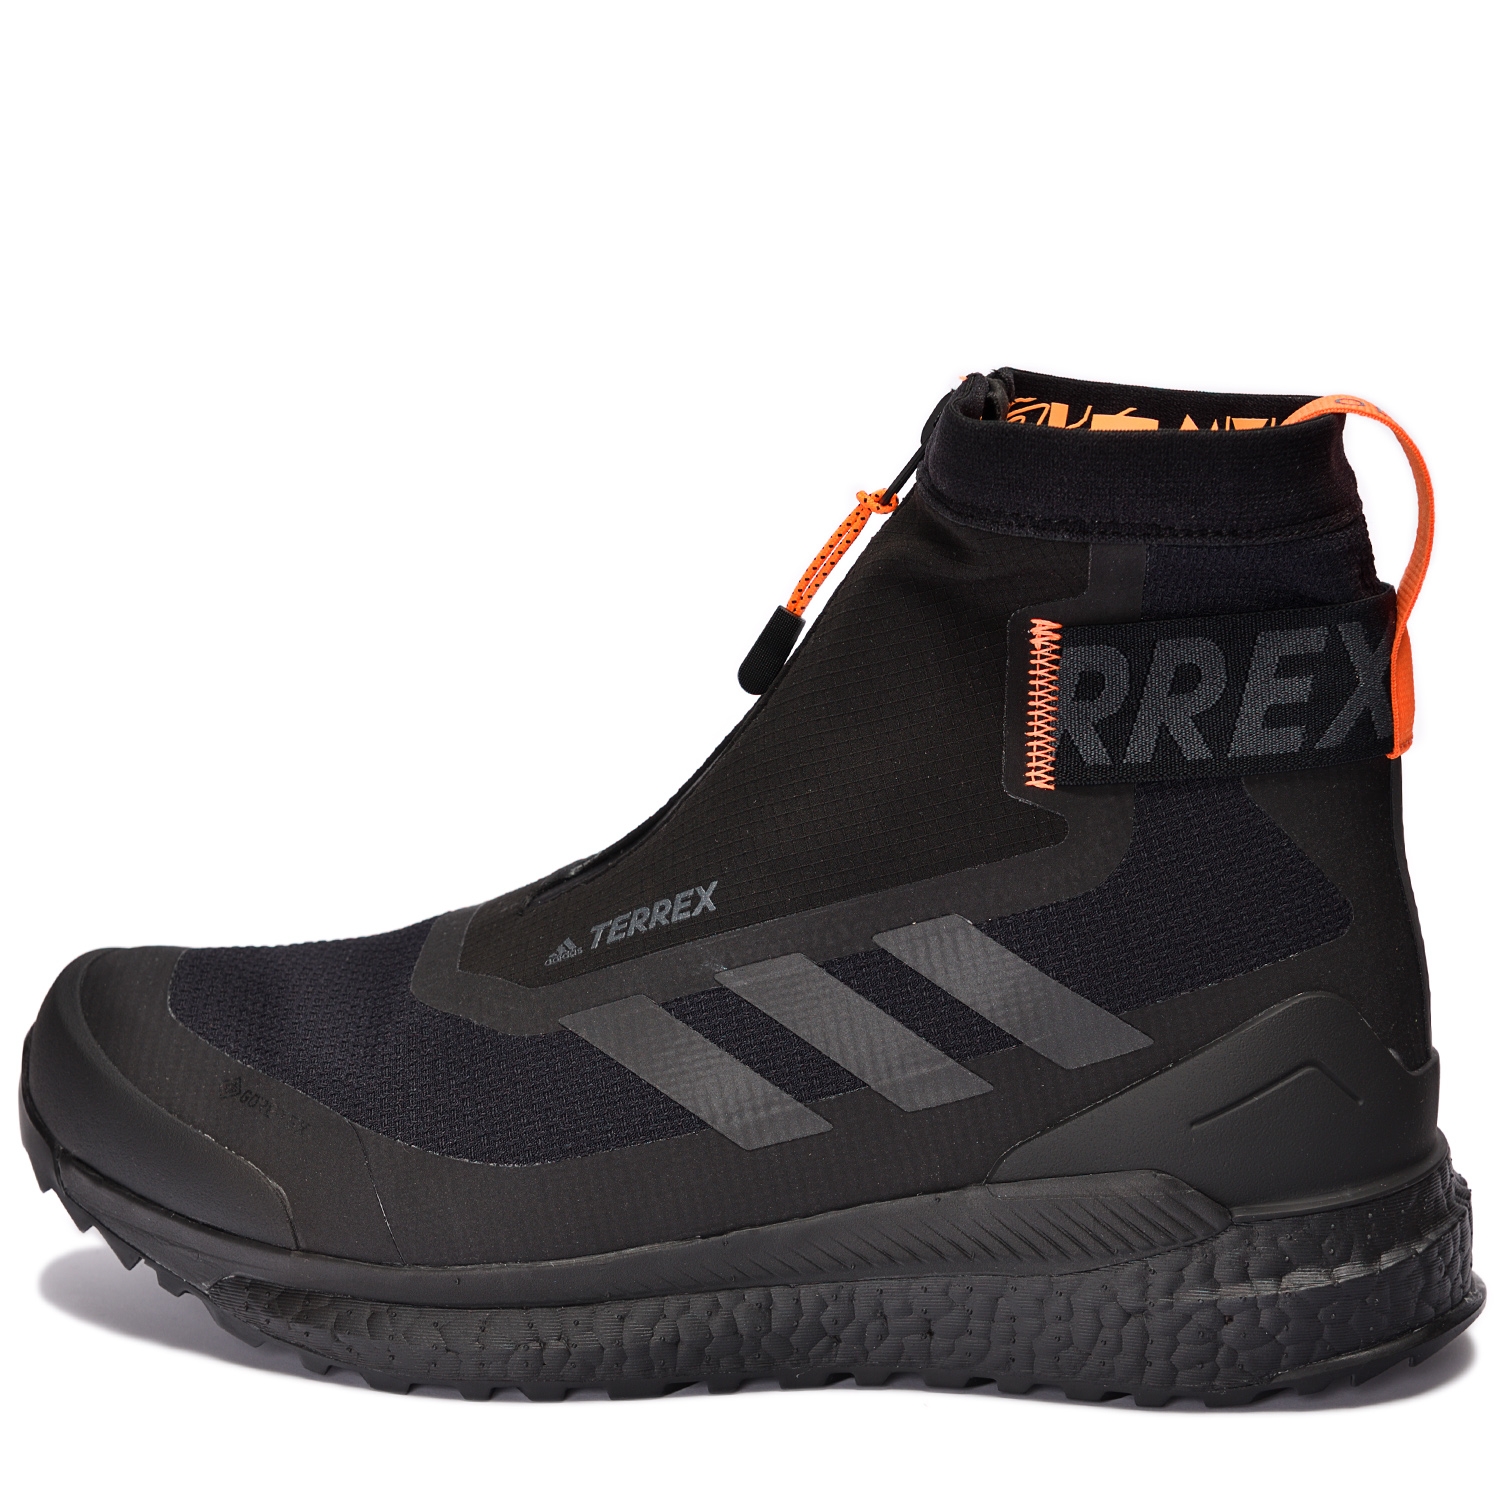 Adidas TERREX GORE-TEX COLD.RDY BLACK / Core Black / Orange